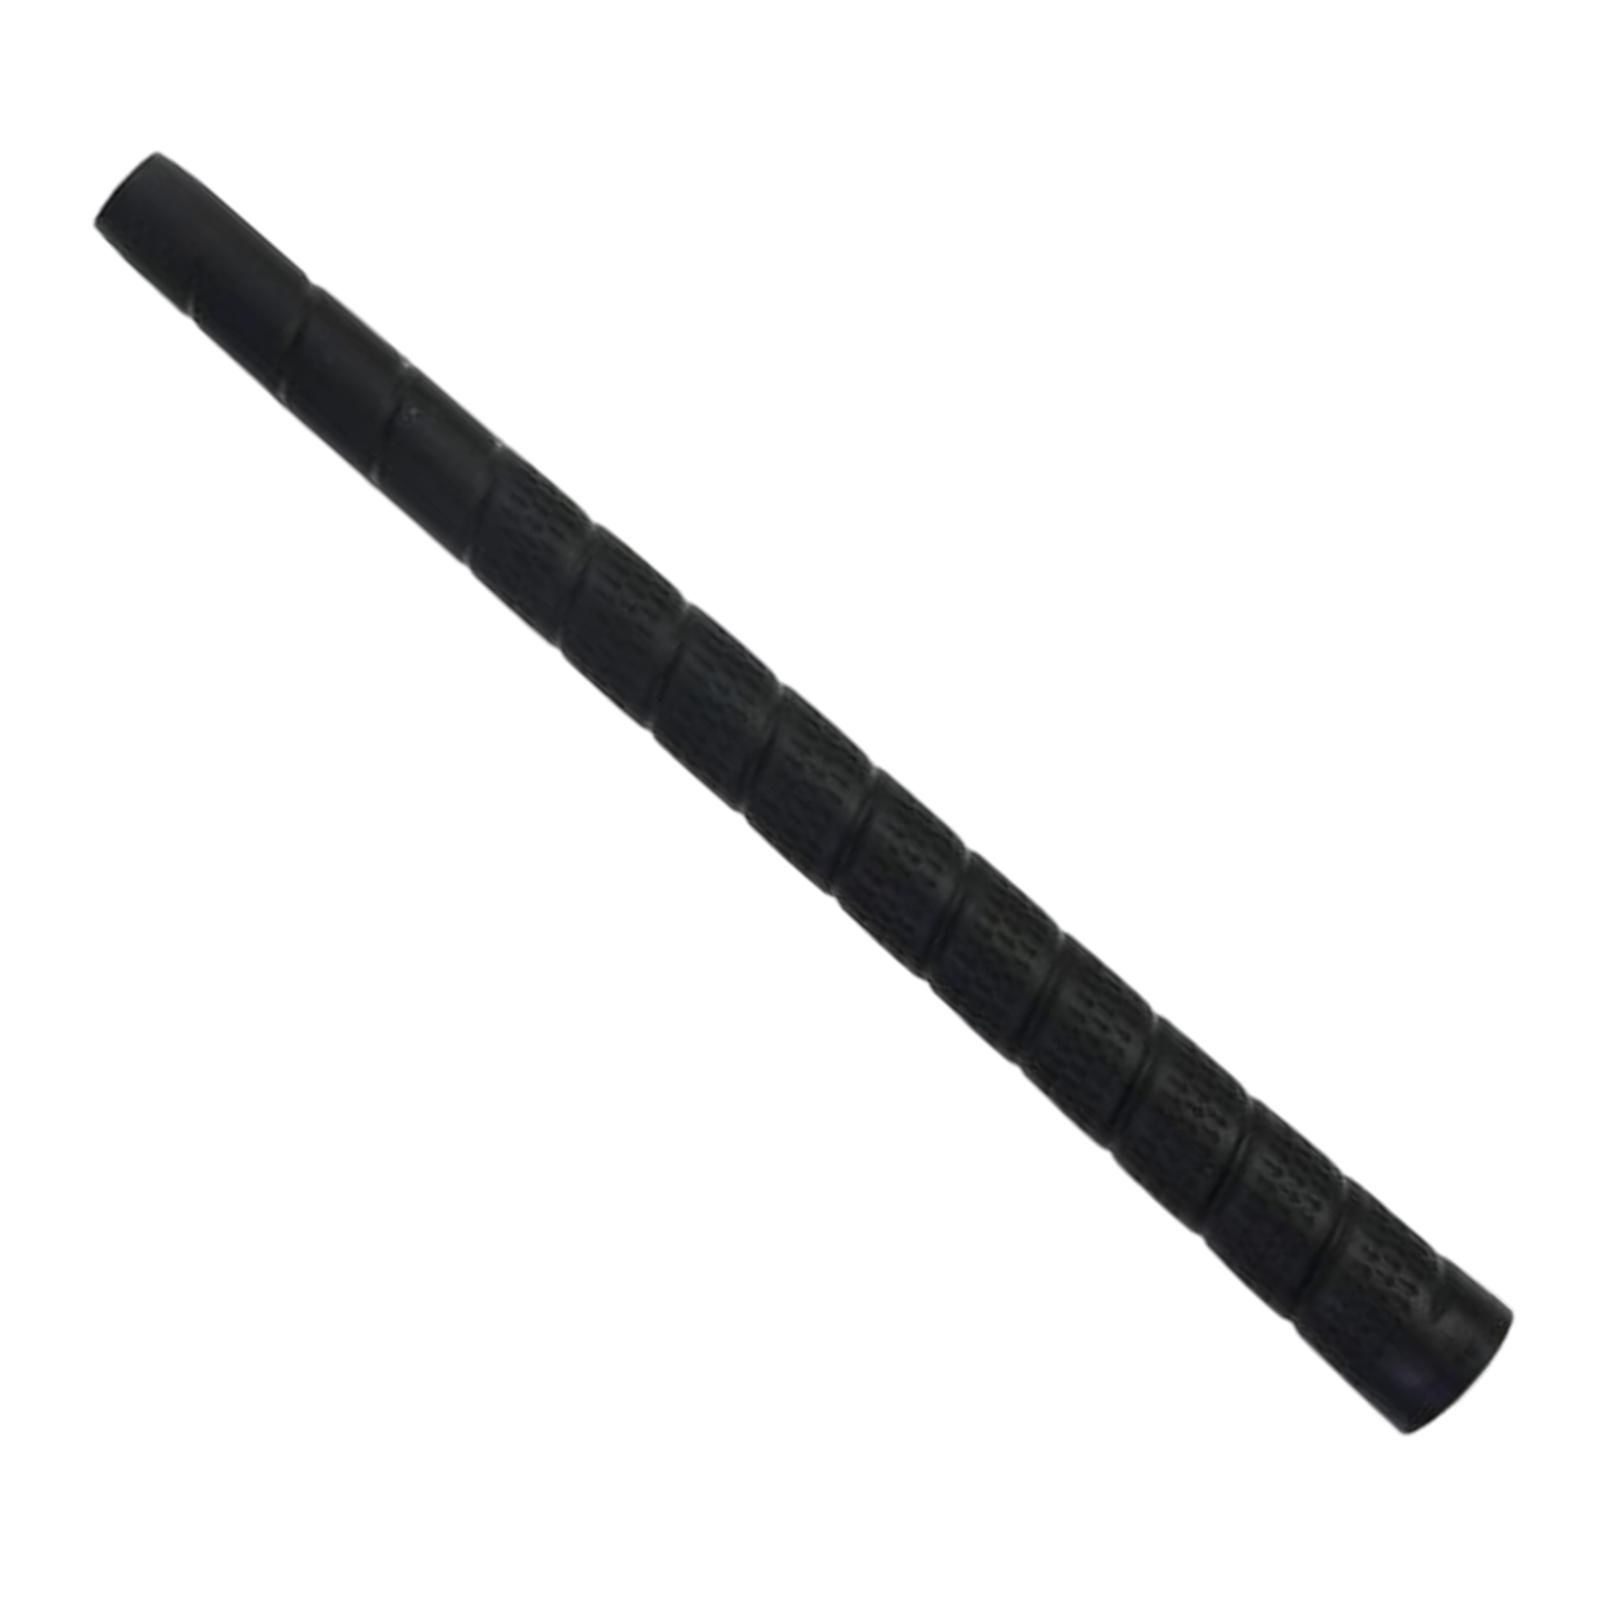 Golf Grips Protector Training Rod Pole Handle Standard for Golf Training Black